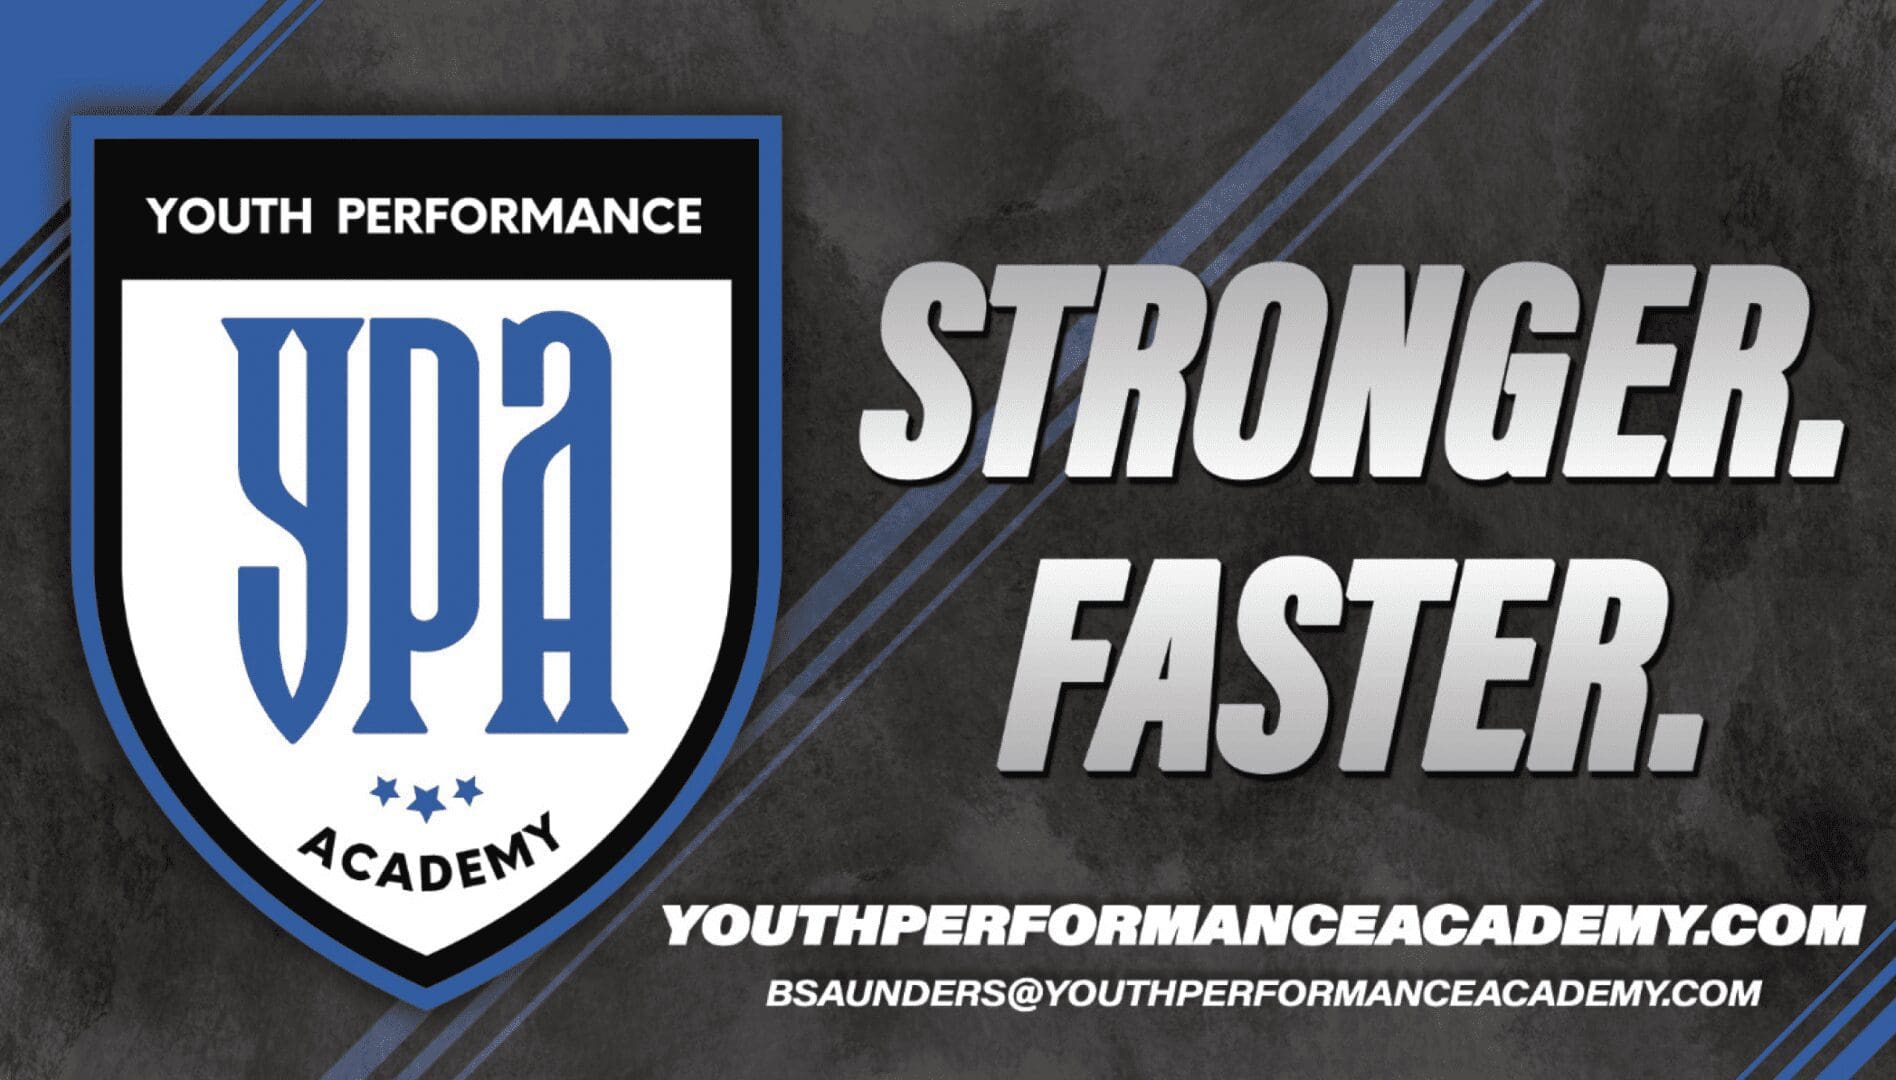 YPA STRONGER FASTER logo